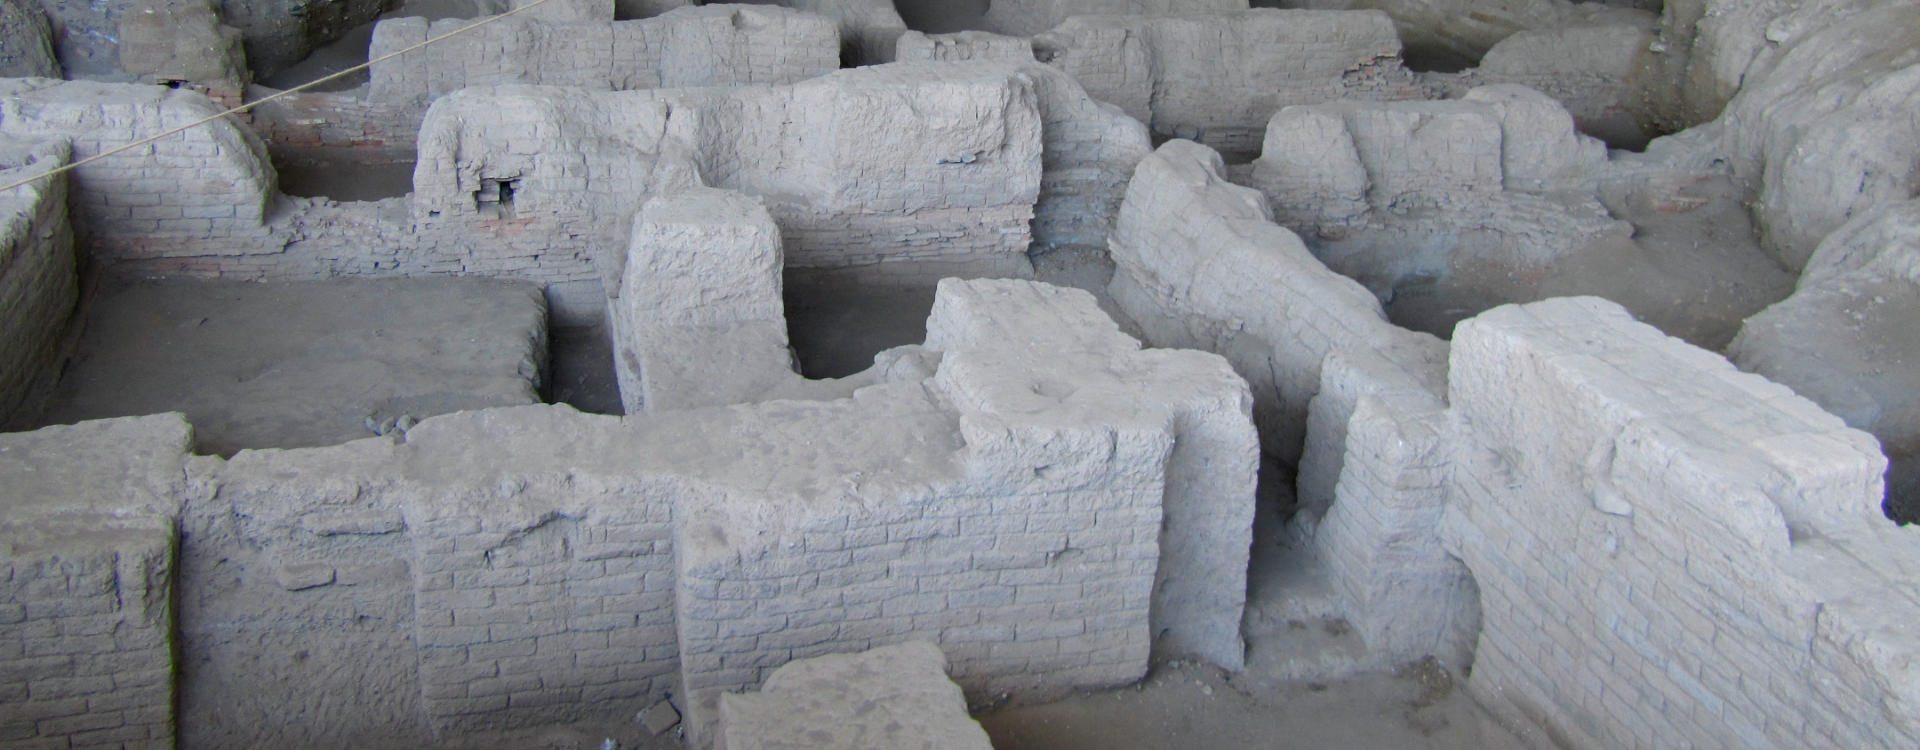 Ruins of ancient Achmetha (aka Ecbatana). Photographer: Behzad39. License: (Creative Commons Attribution-Share Alike 4.0). Cropped.